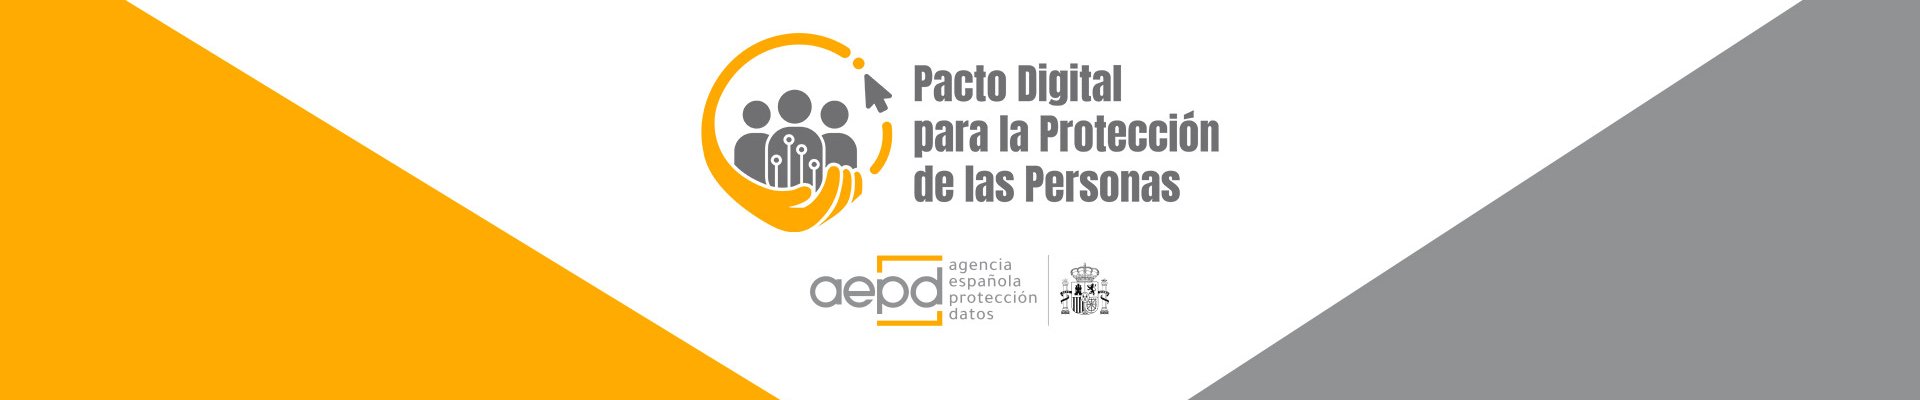 AEPD Pacto Digital